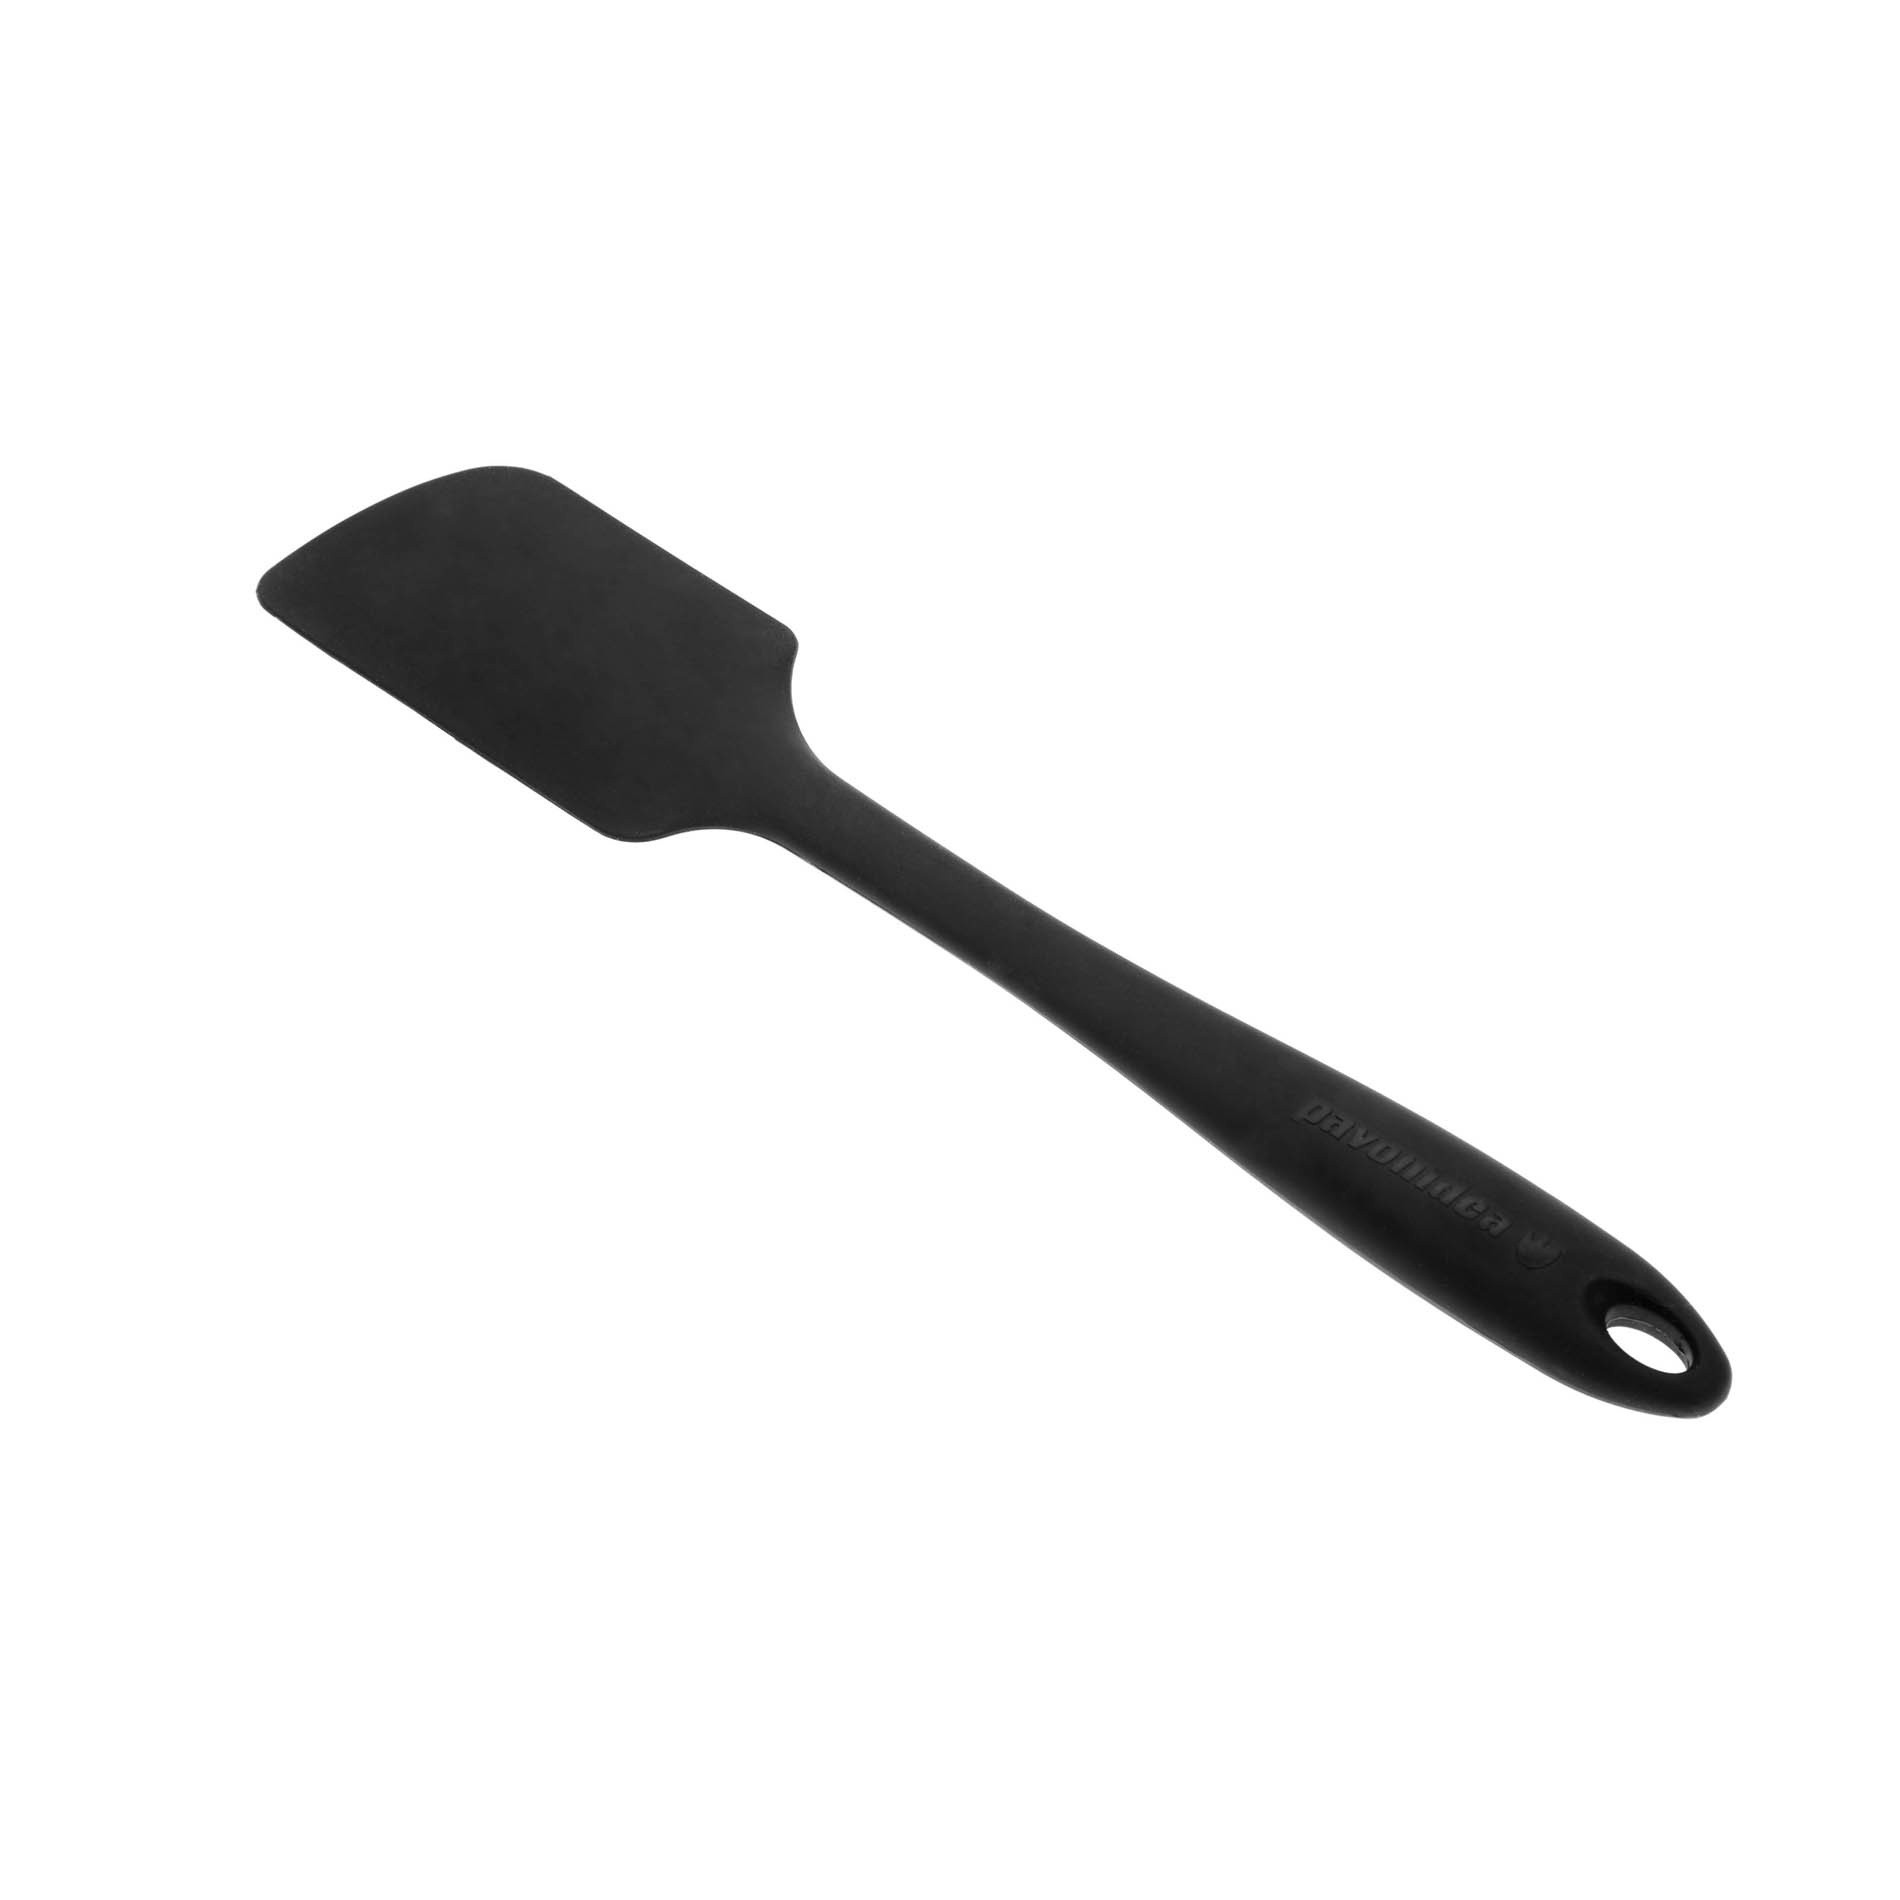 Silicone spatula Davide Oldani for Coincasa, Black, large image number 0